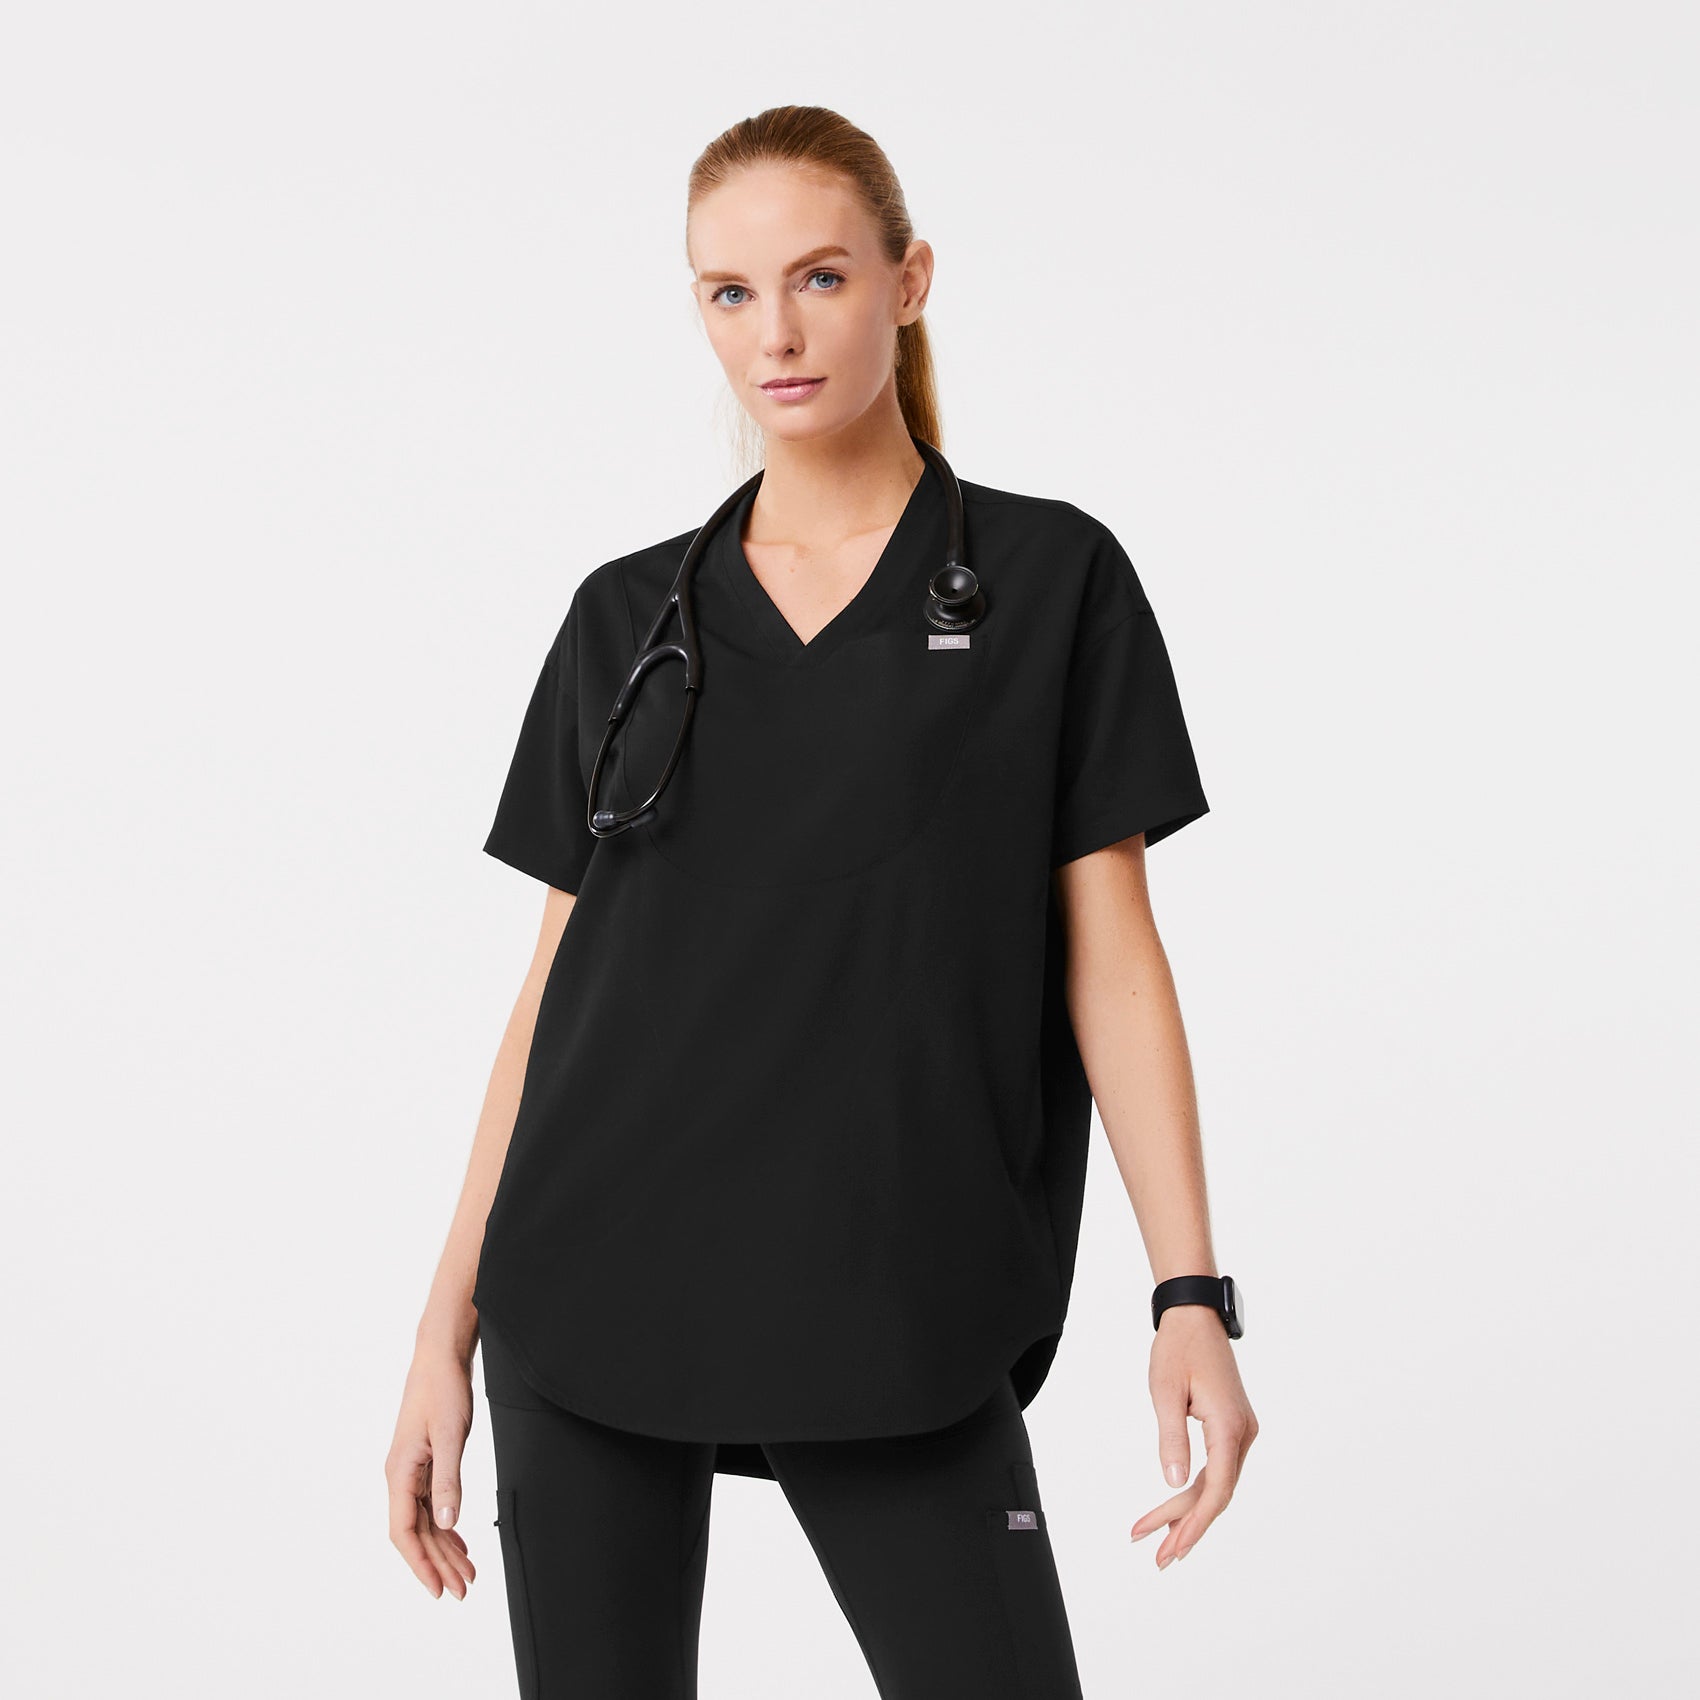 Women's Scrubs - Premium Medical Uniforms & Apparel · FIGS